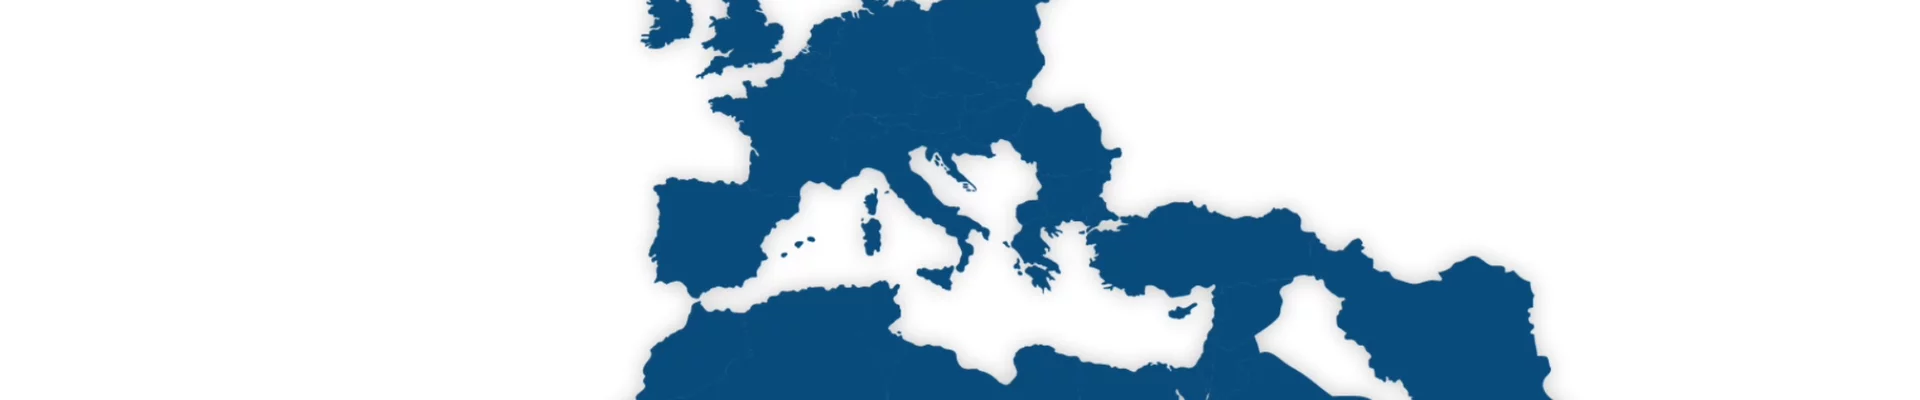 Mediterranean Dialogue Map